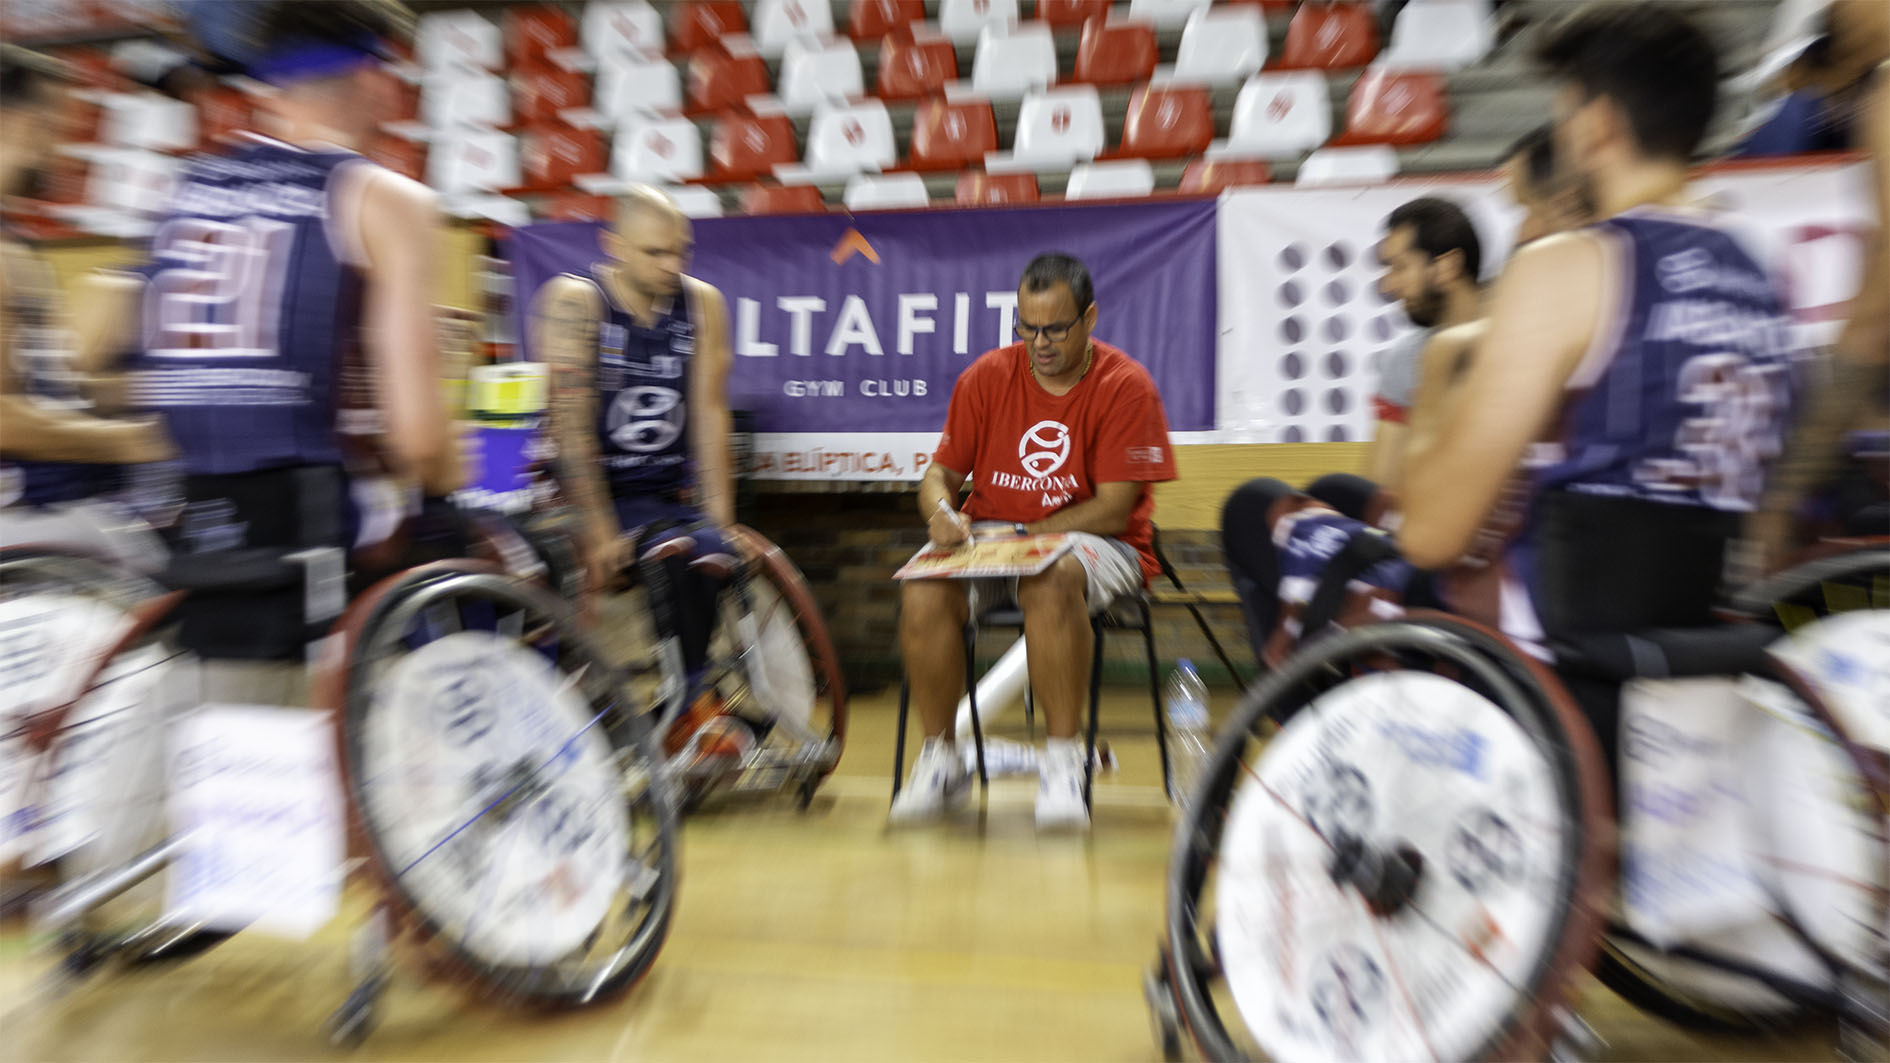  Amfiv Vigo baloncesto en silla de ruedas - Página 5 IMG_0410